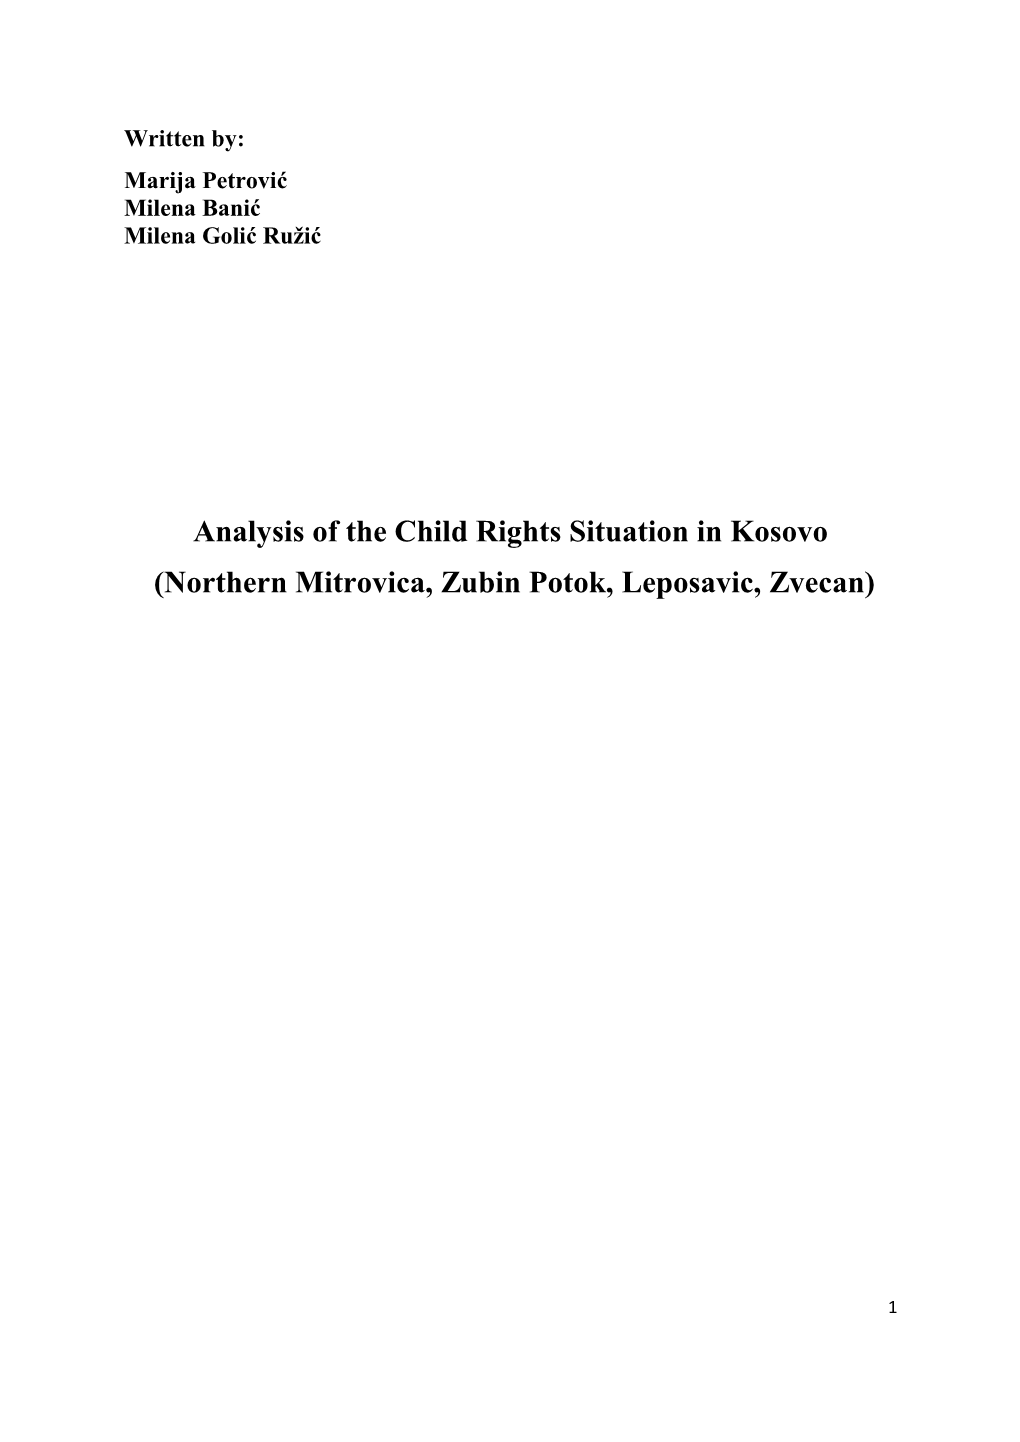 Analysis of the Child Rights Situation in Kosovo (Northern Mitrovica, Zubin Potok, Leposavic, Zvecan)